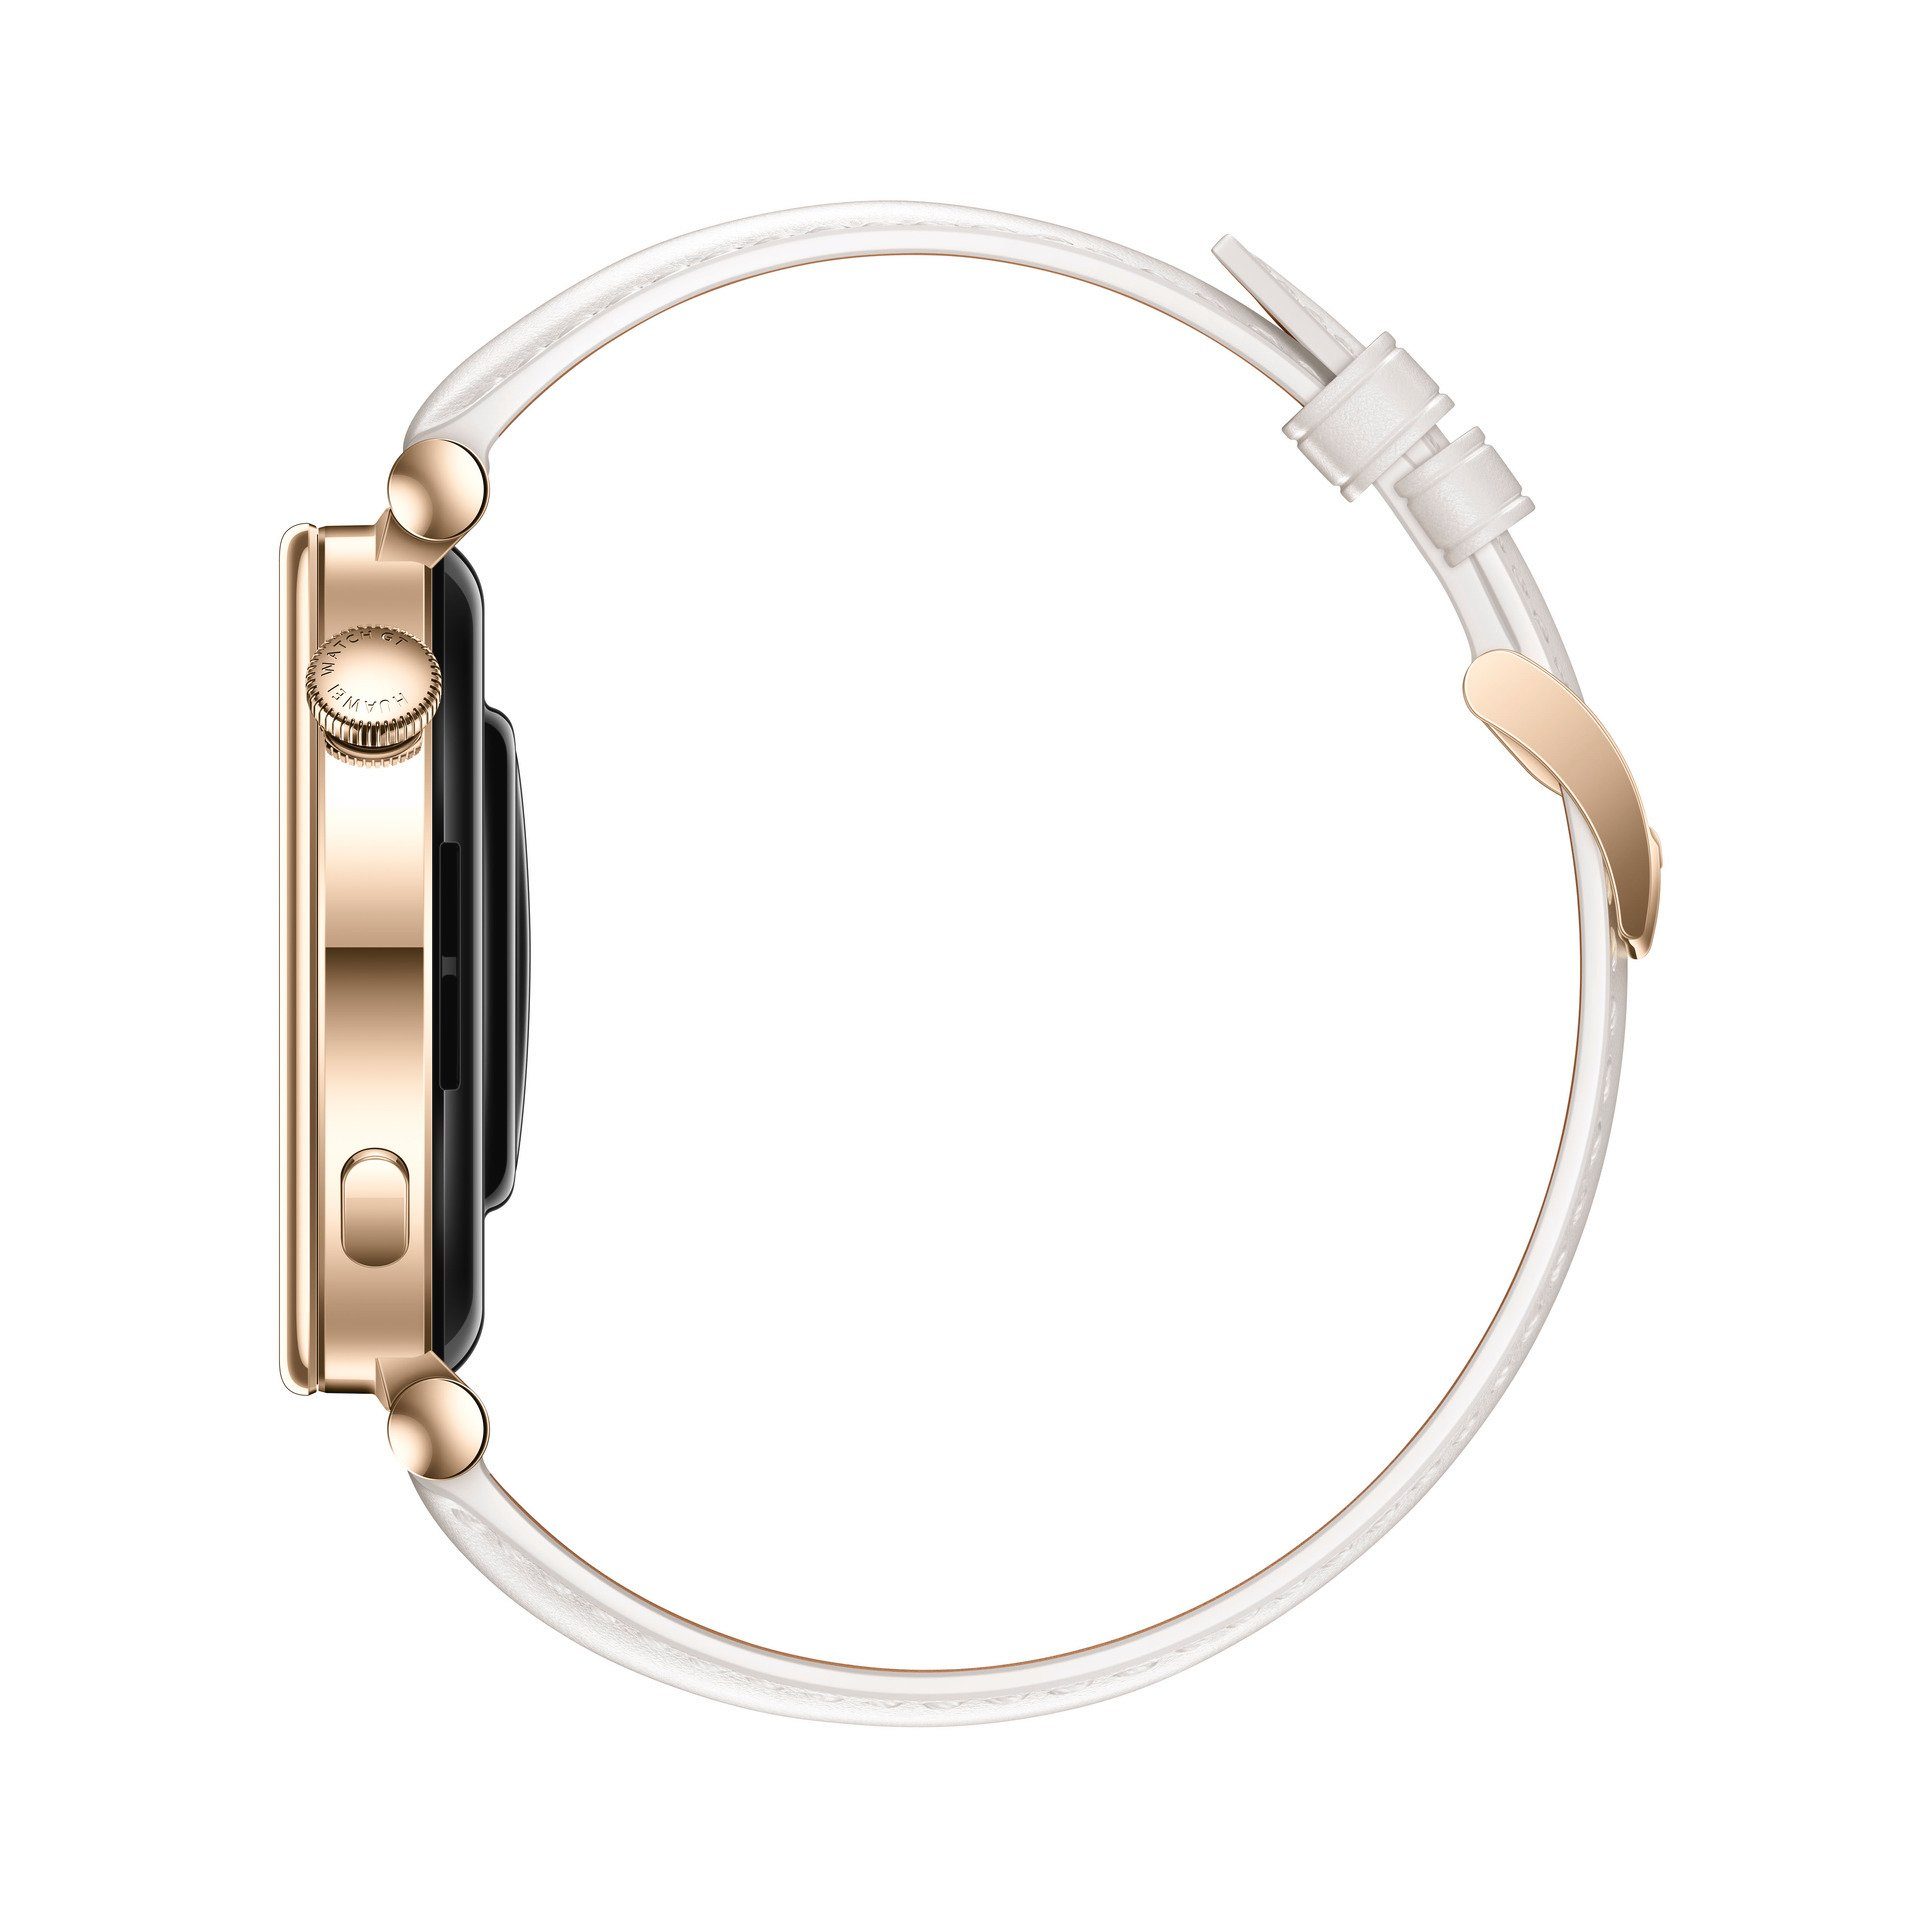 41mm weiß GT4 (3,35 cm/1,32 Huawei Smartwatch Weiß | Zoll) Watch